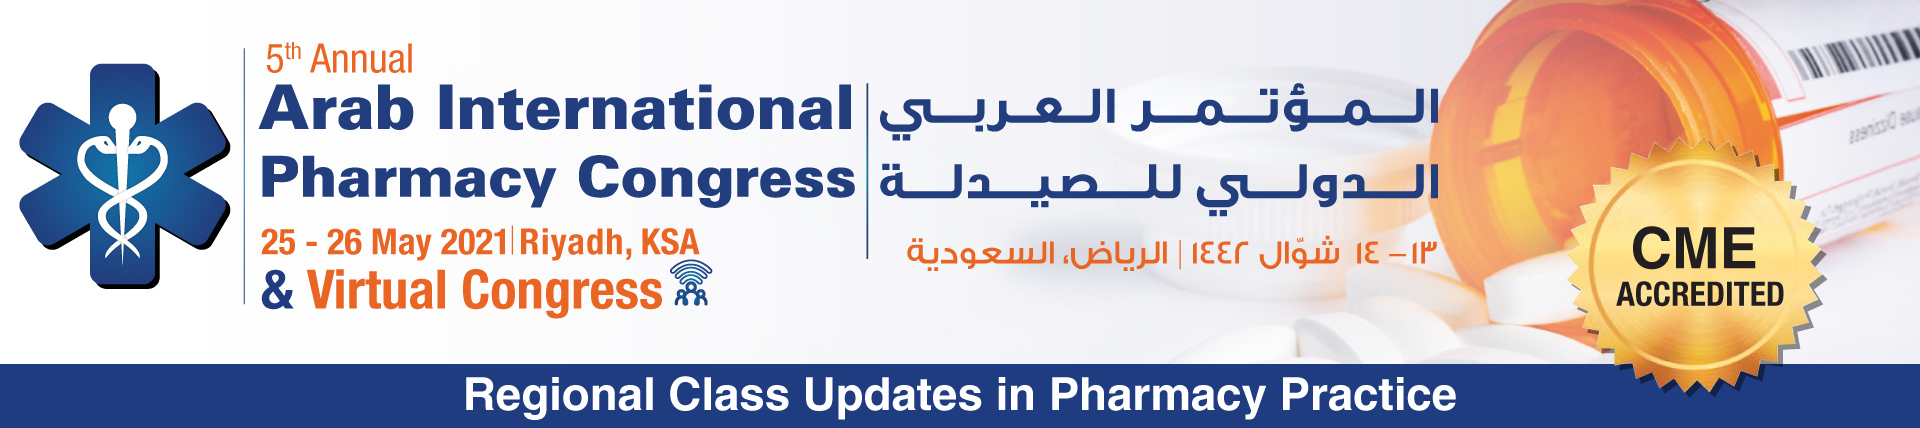 Arab International Pharmacy Congress Virtual Series, Online, Saudi Arabia